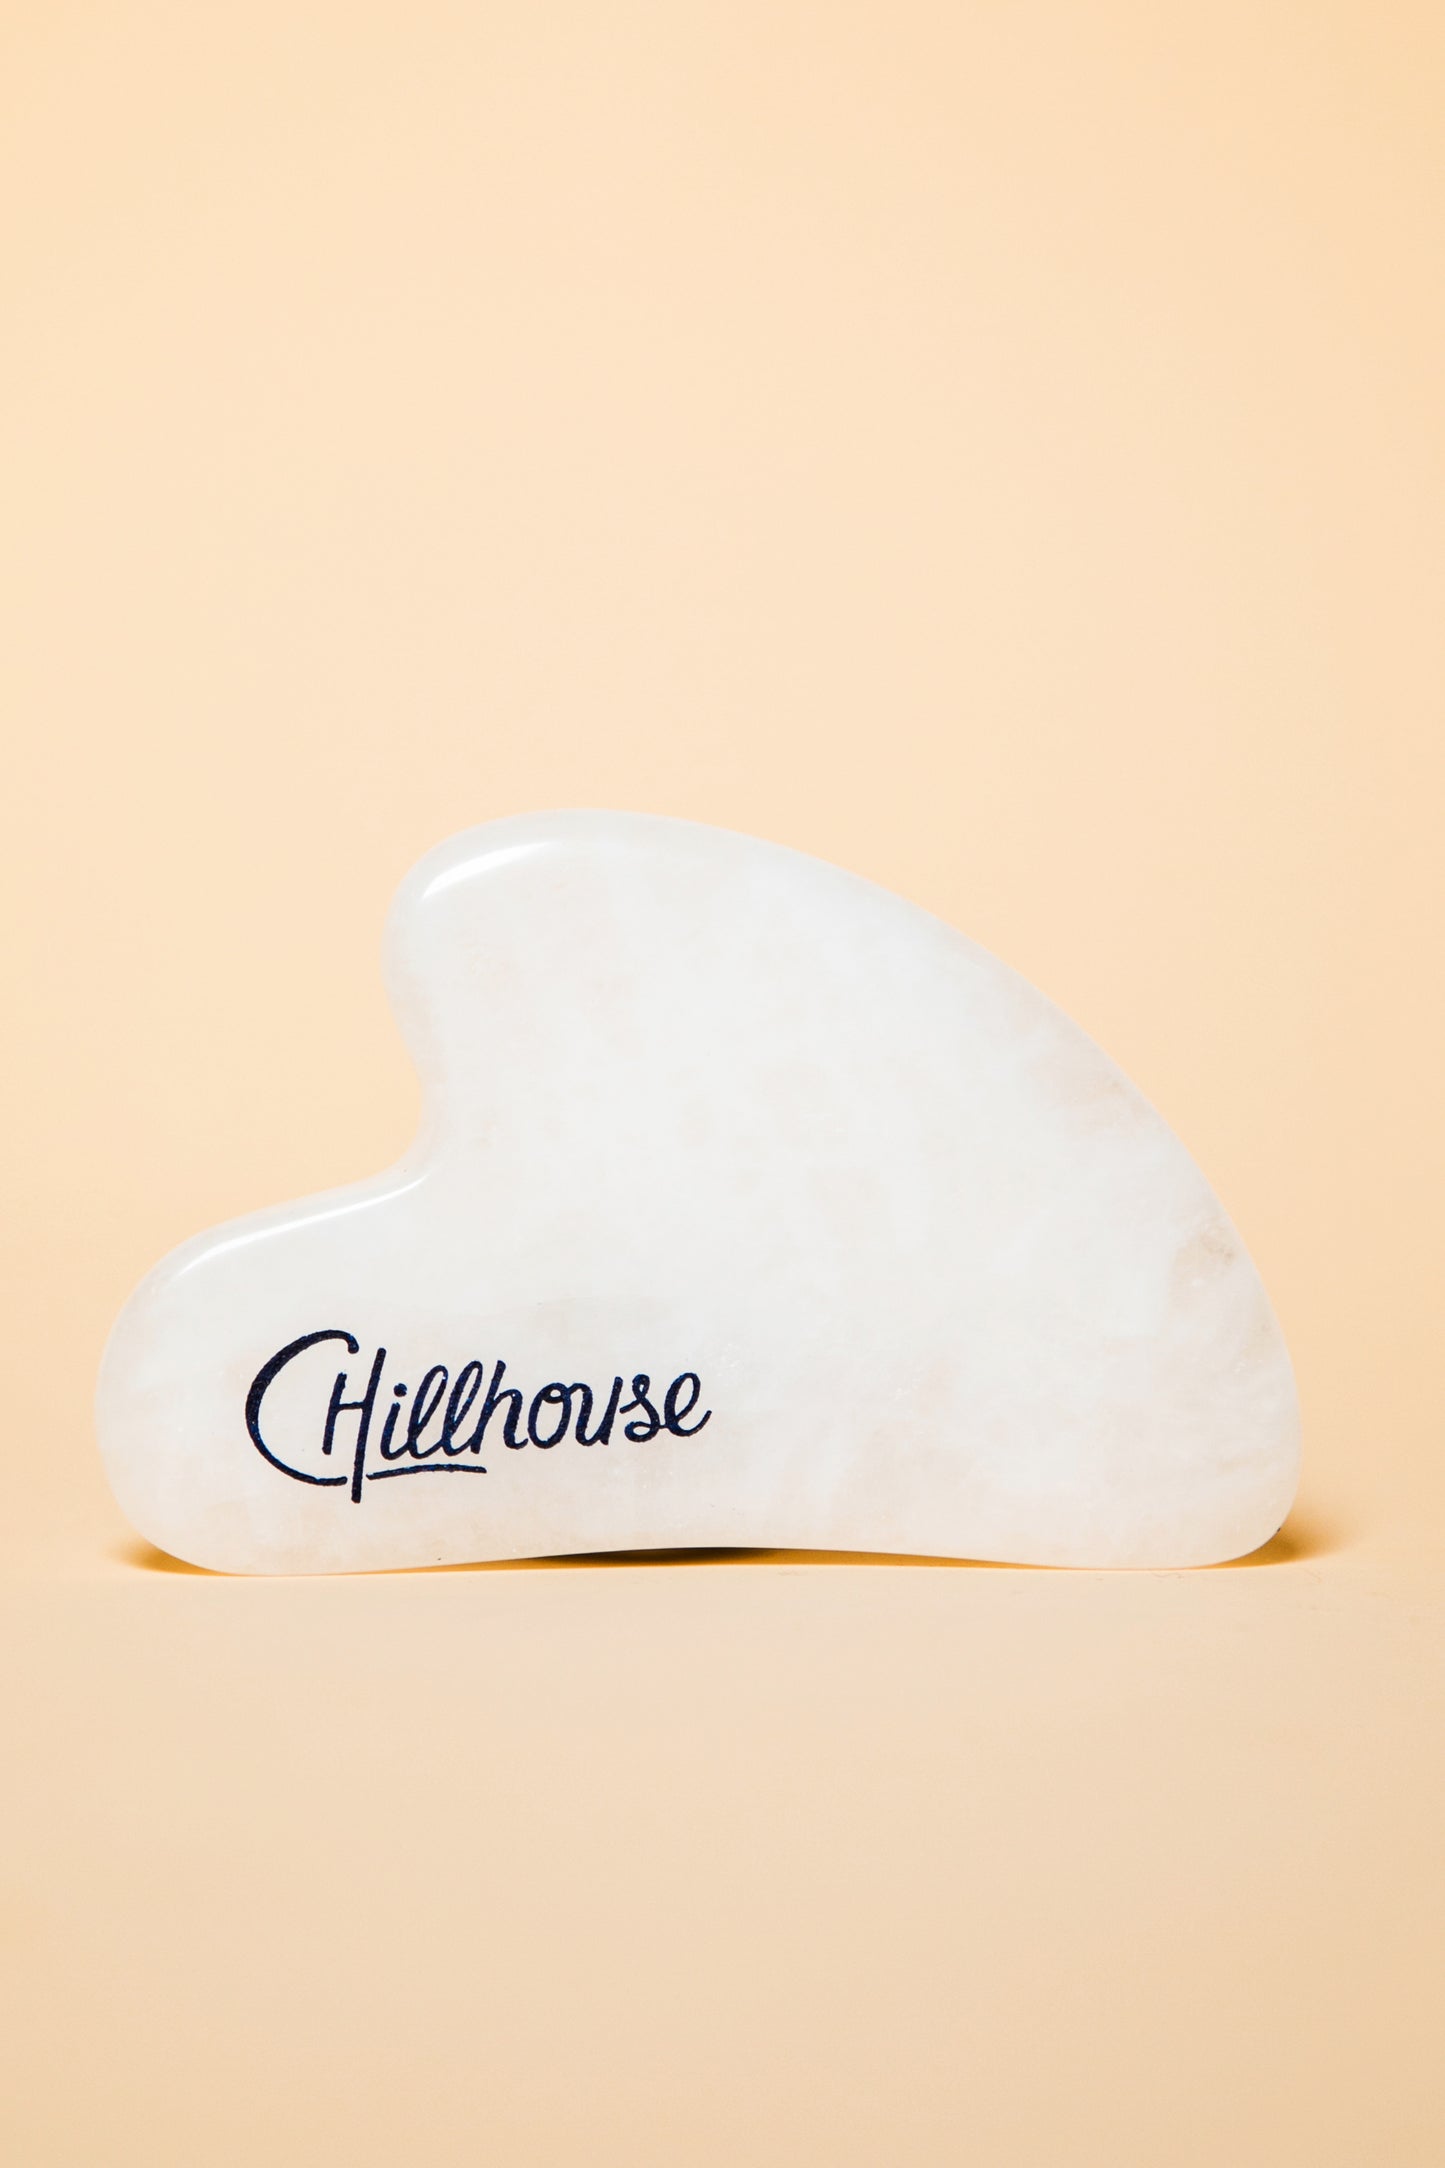 Chillhouse - Gua Sha